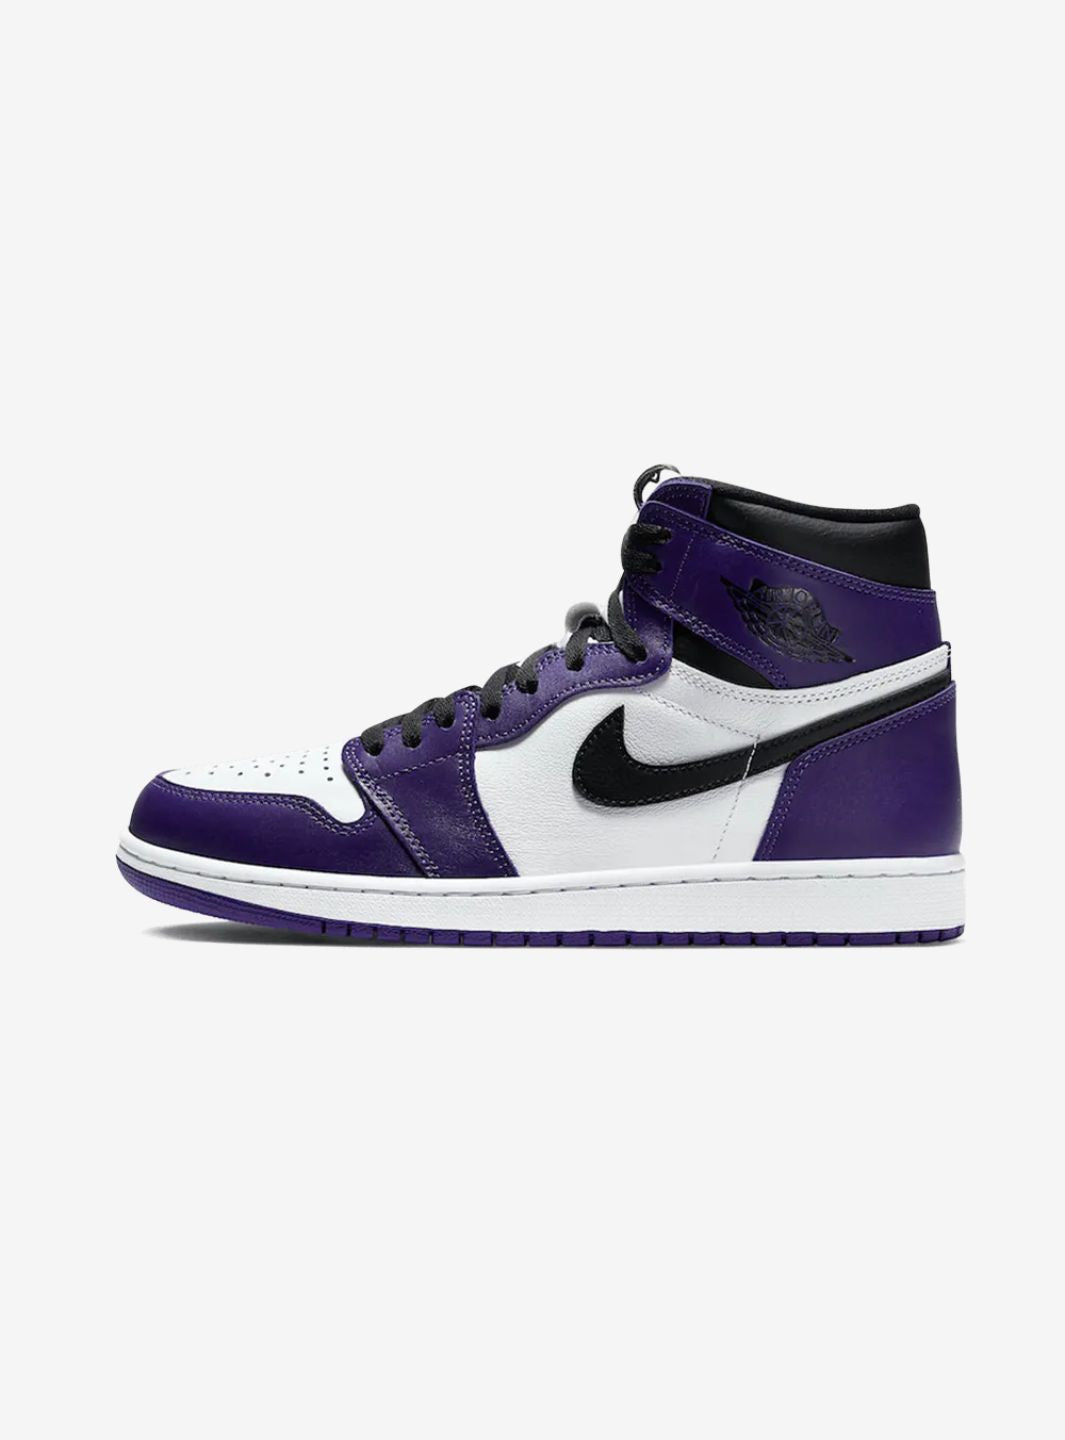 Air Jordan 1 Retro High Court Purple White - 555088-500 | ResellZone